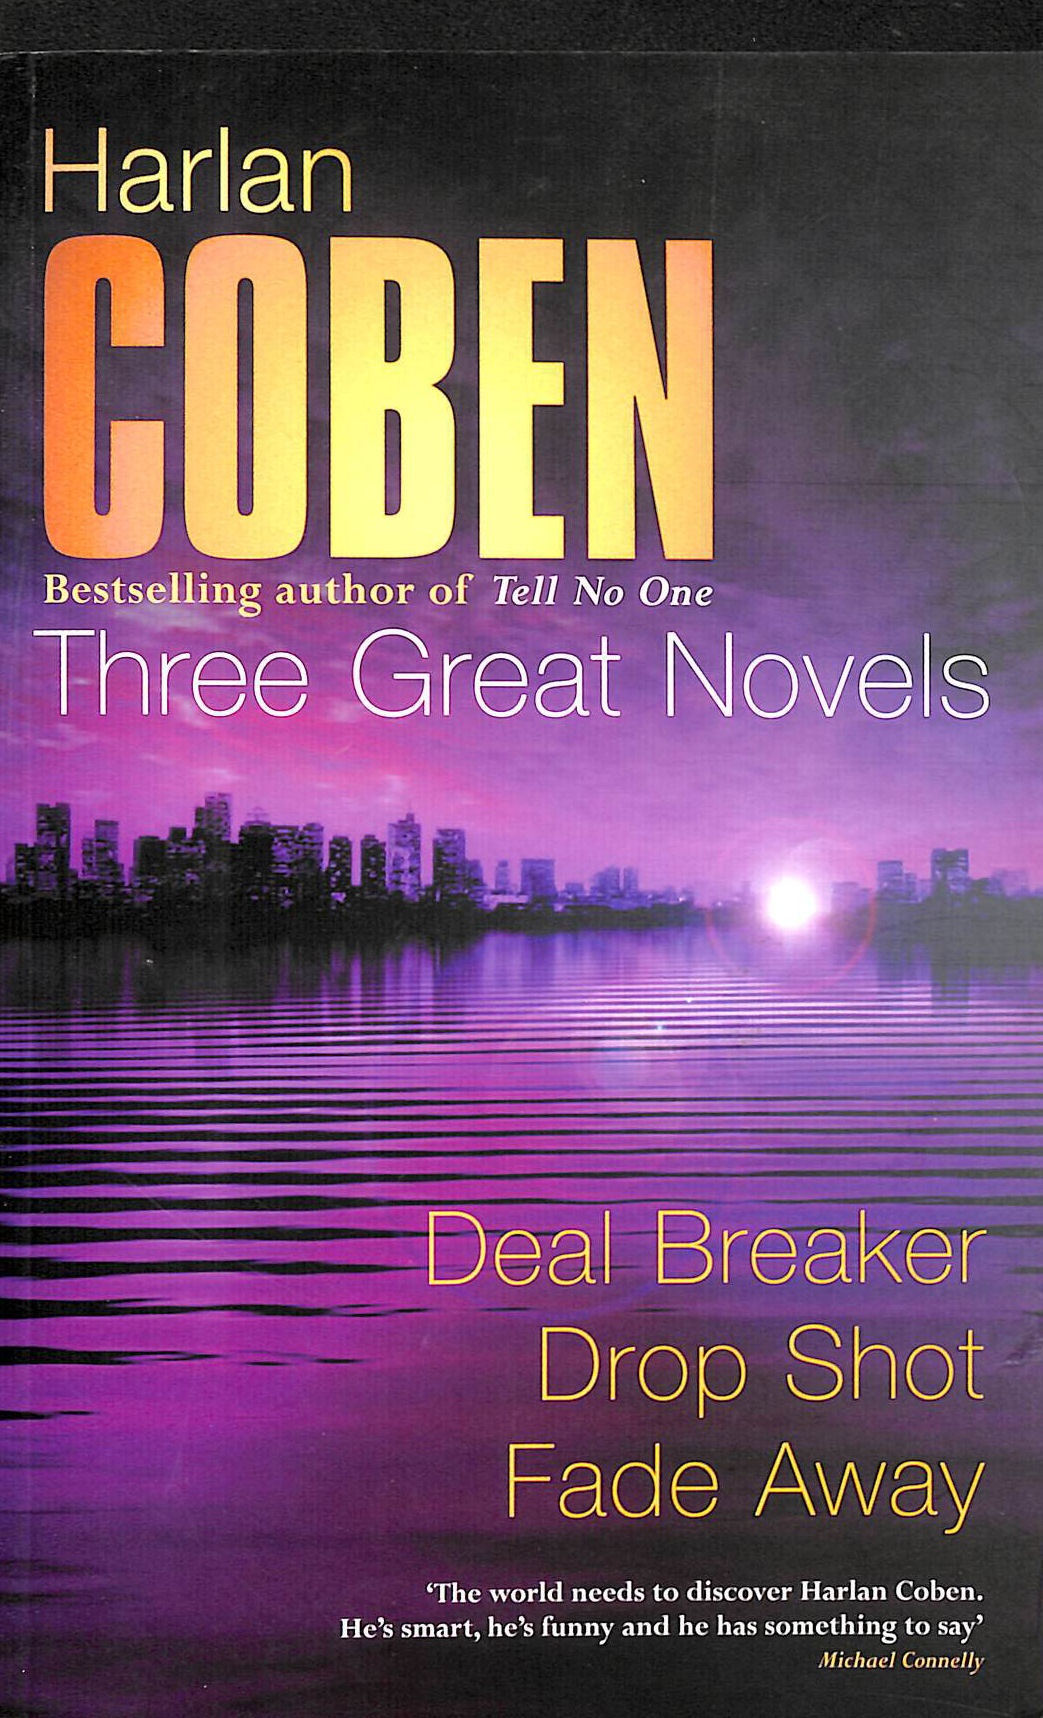 COBEN, HARLAN - Harlan Coben: Three Great Novels: Deal Breaker, Drop Shot, Fade-Away